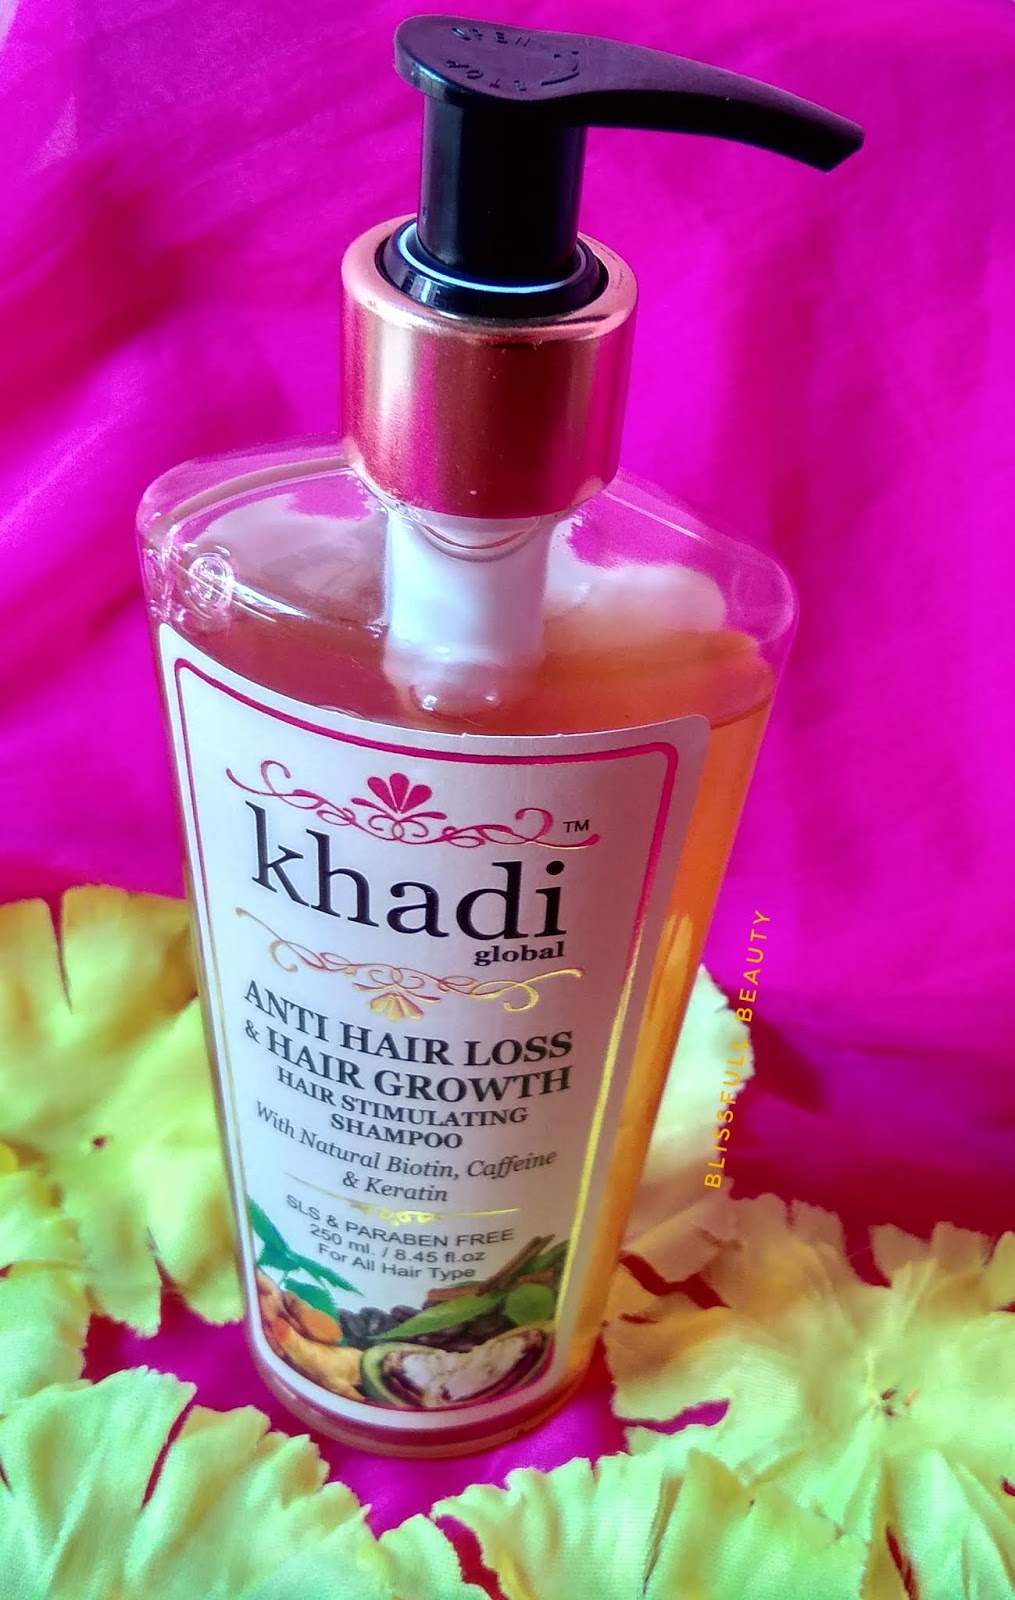 Khadi Global Anti Hair Loss & Hair Growth Hair Stimulating Shampoo Review